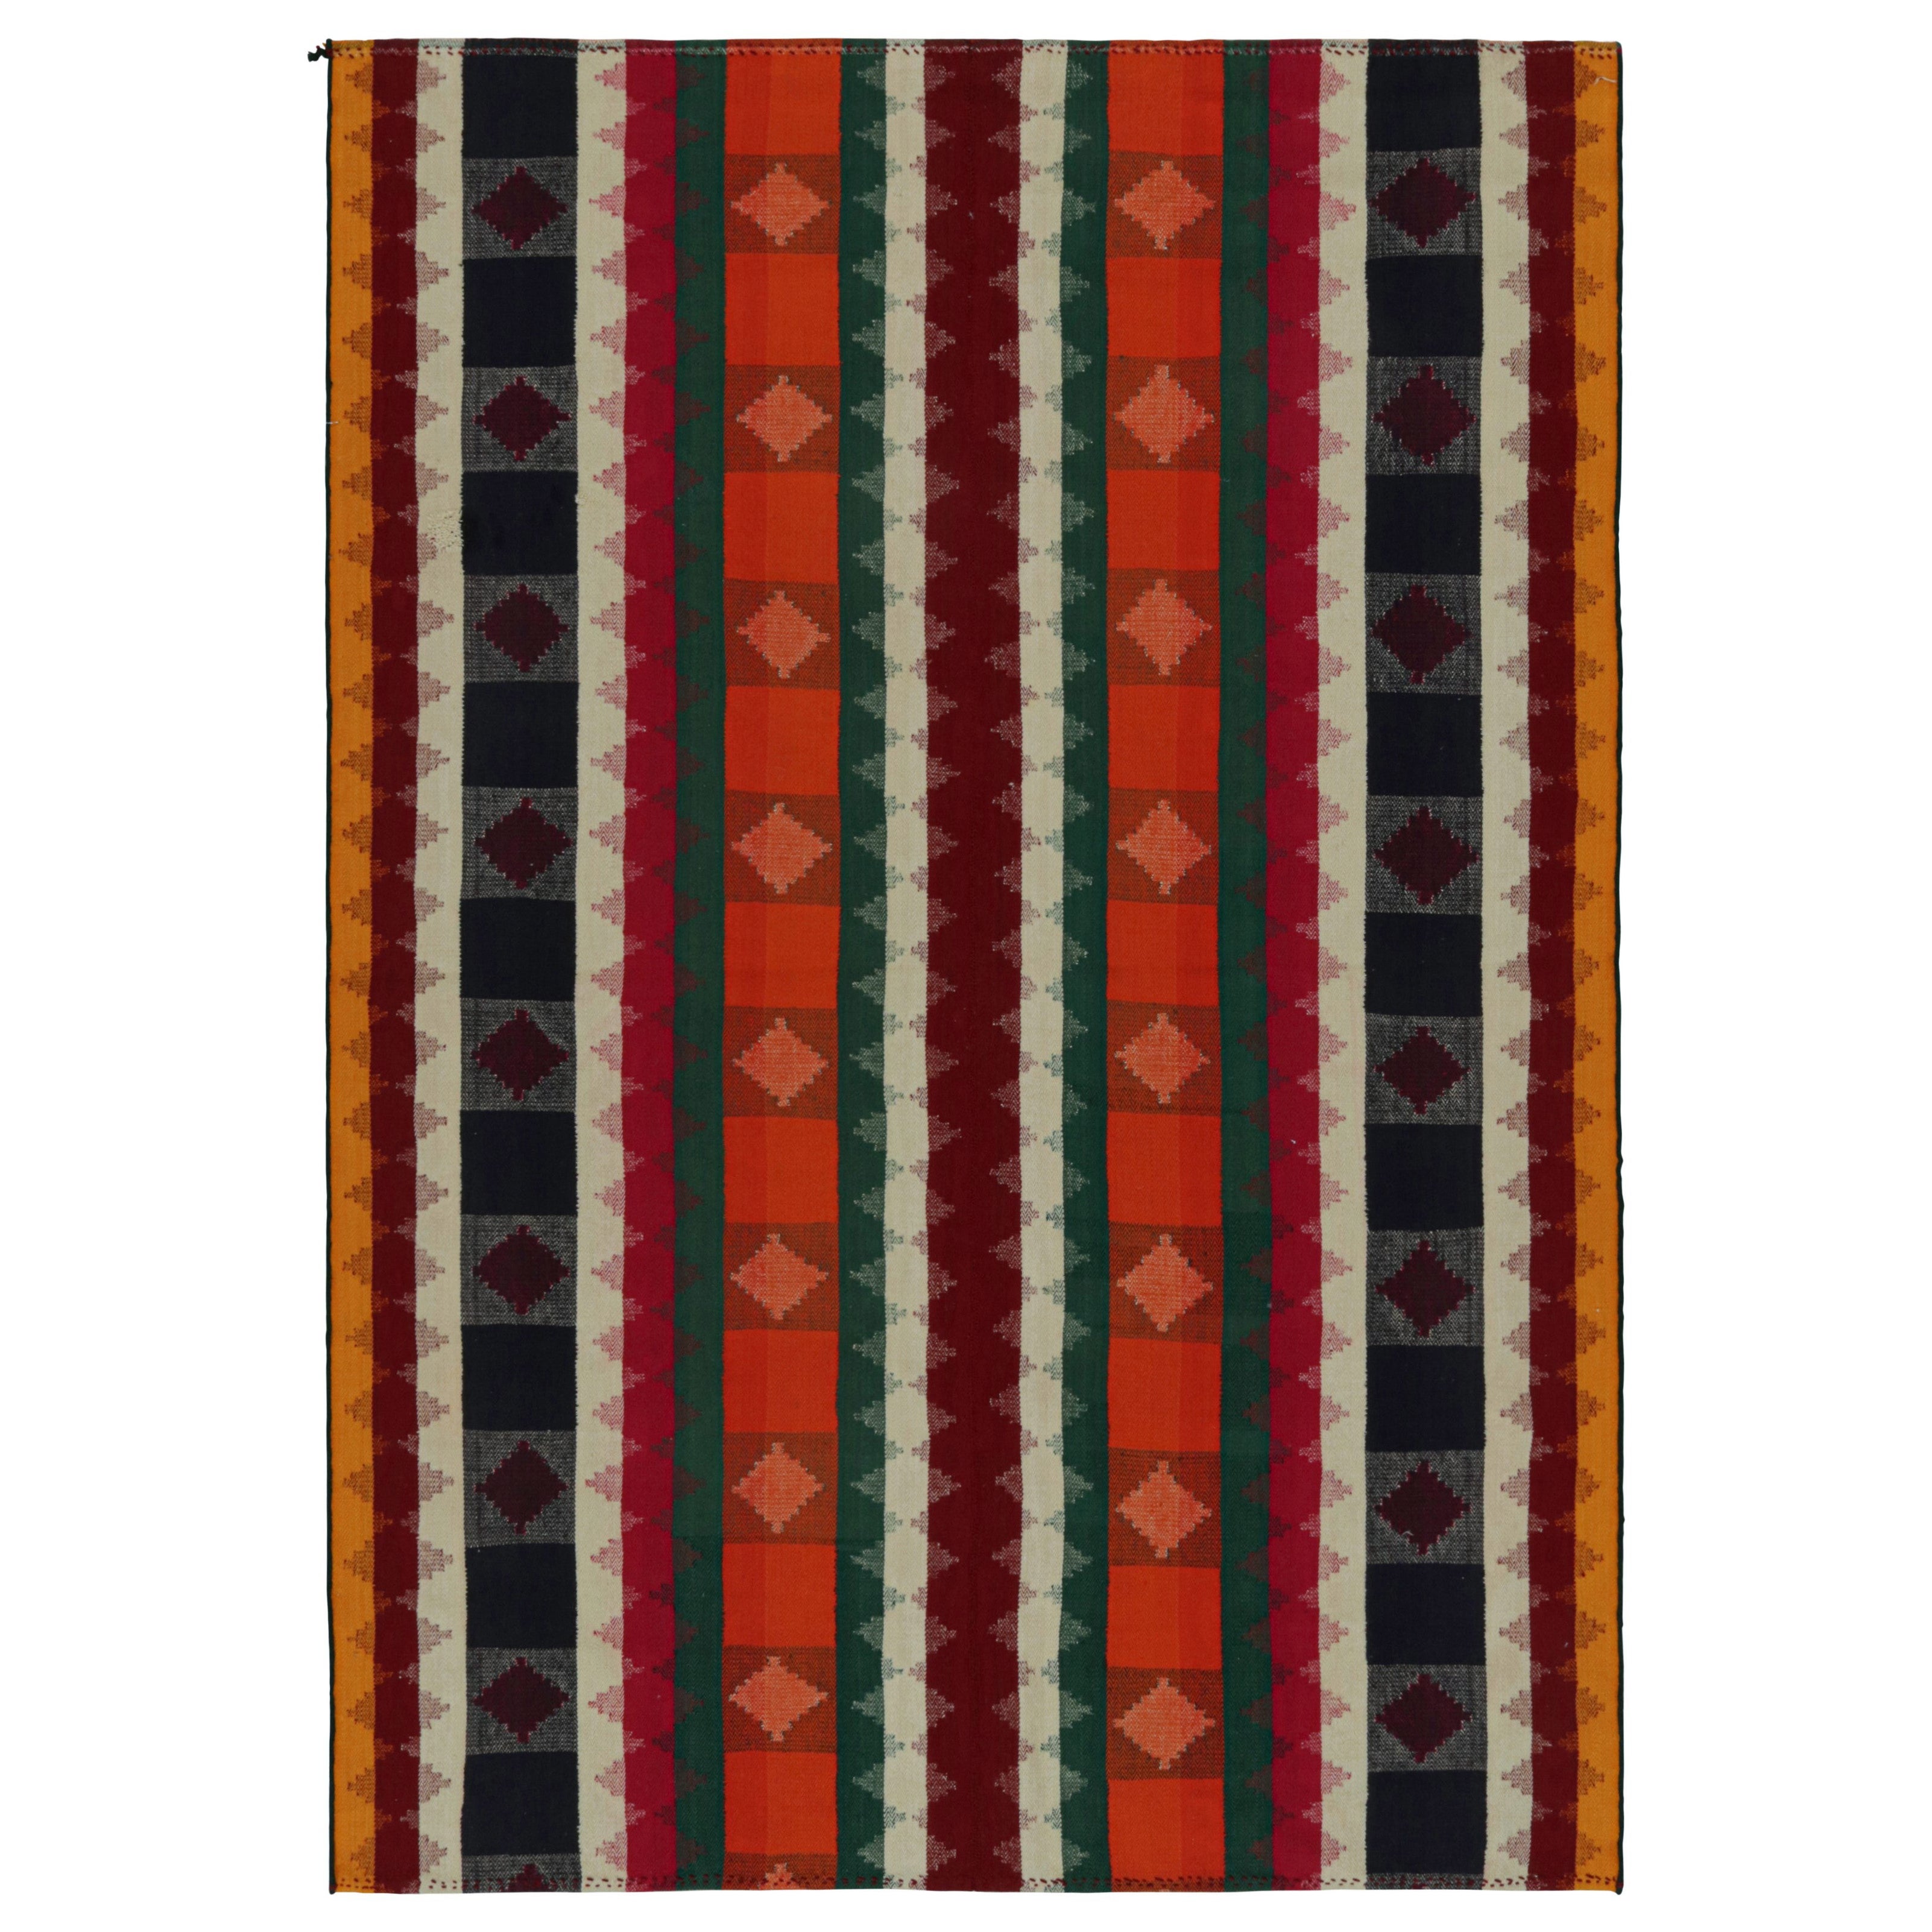 Vintage Afghani tribal Kilim rug, with Geometric patterns, from Rug & Kilim